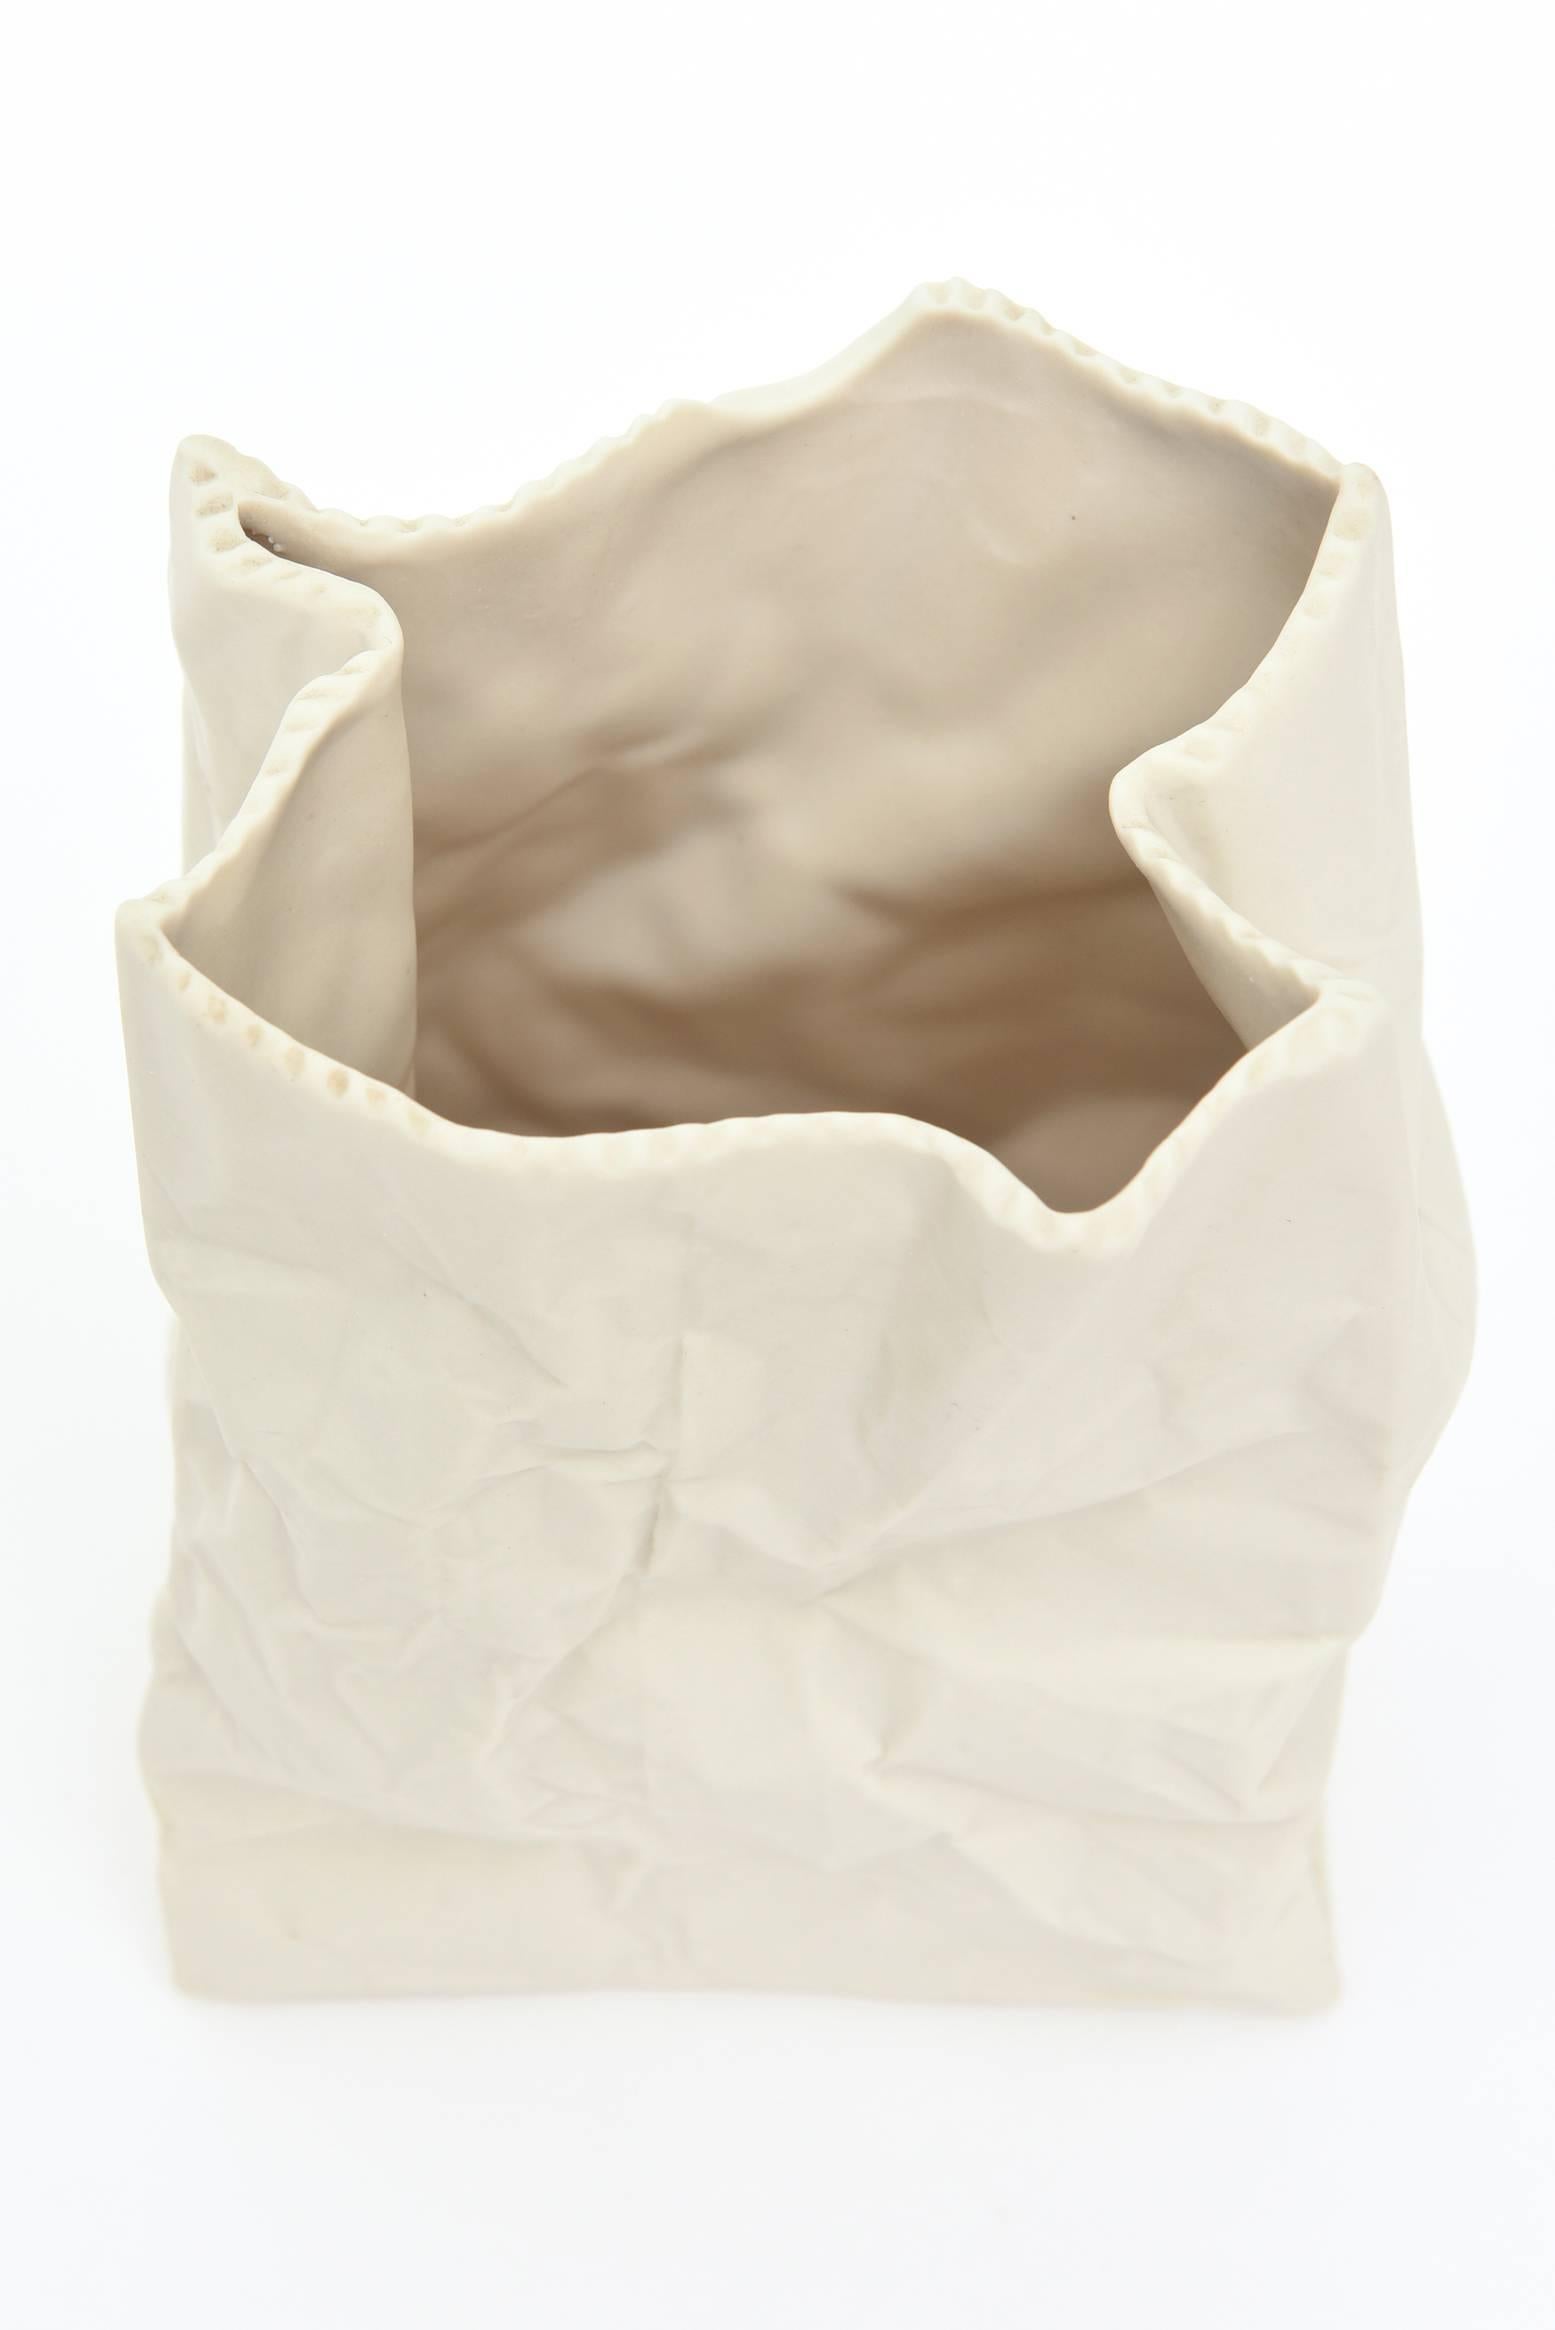 Crushed and Folded Bag Ceramic Sculpture or Vase /SATURDAY SALE 3